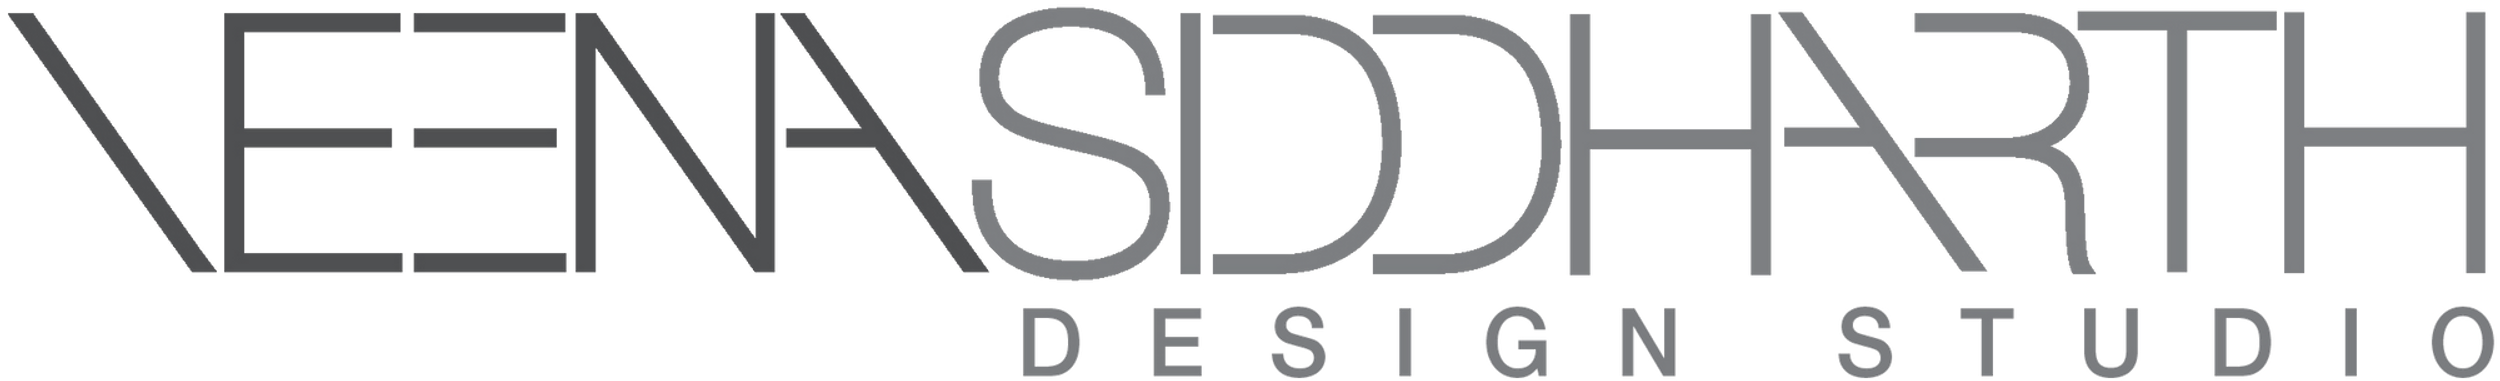 vsdesignstudio logo